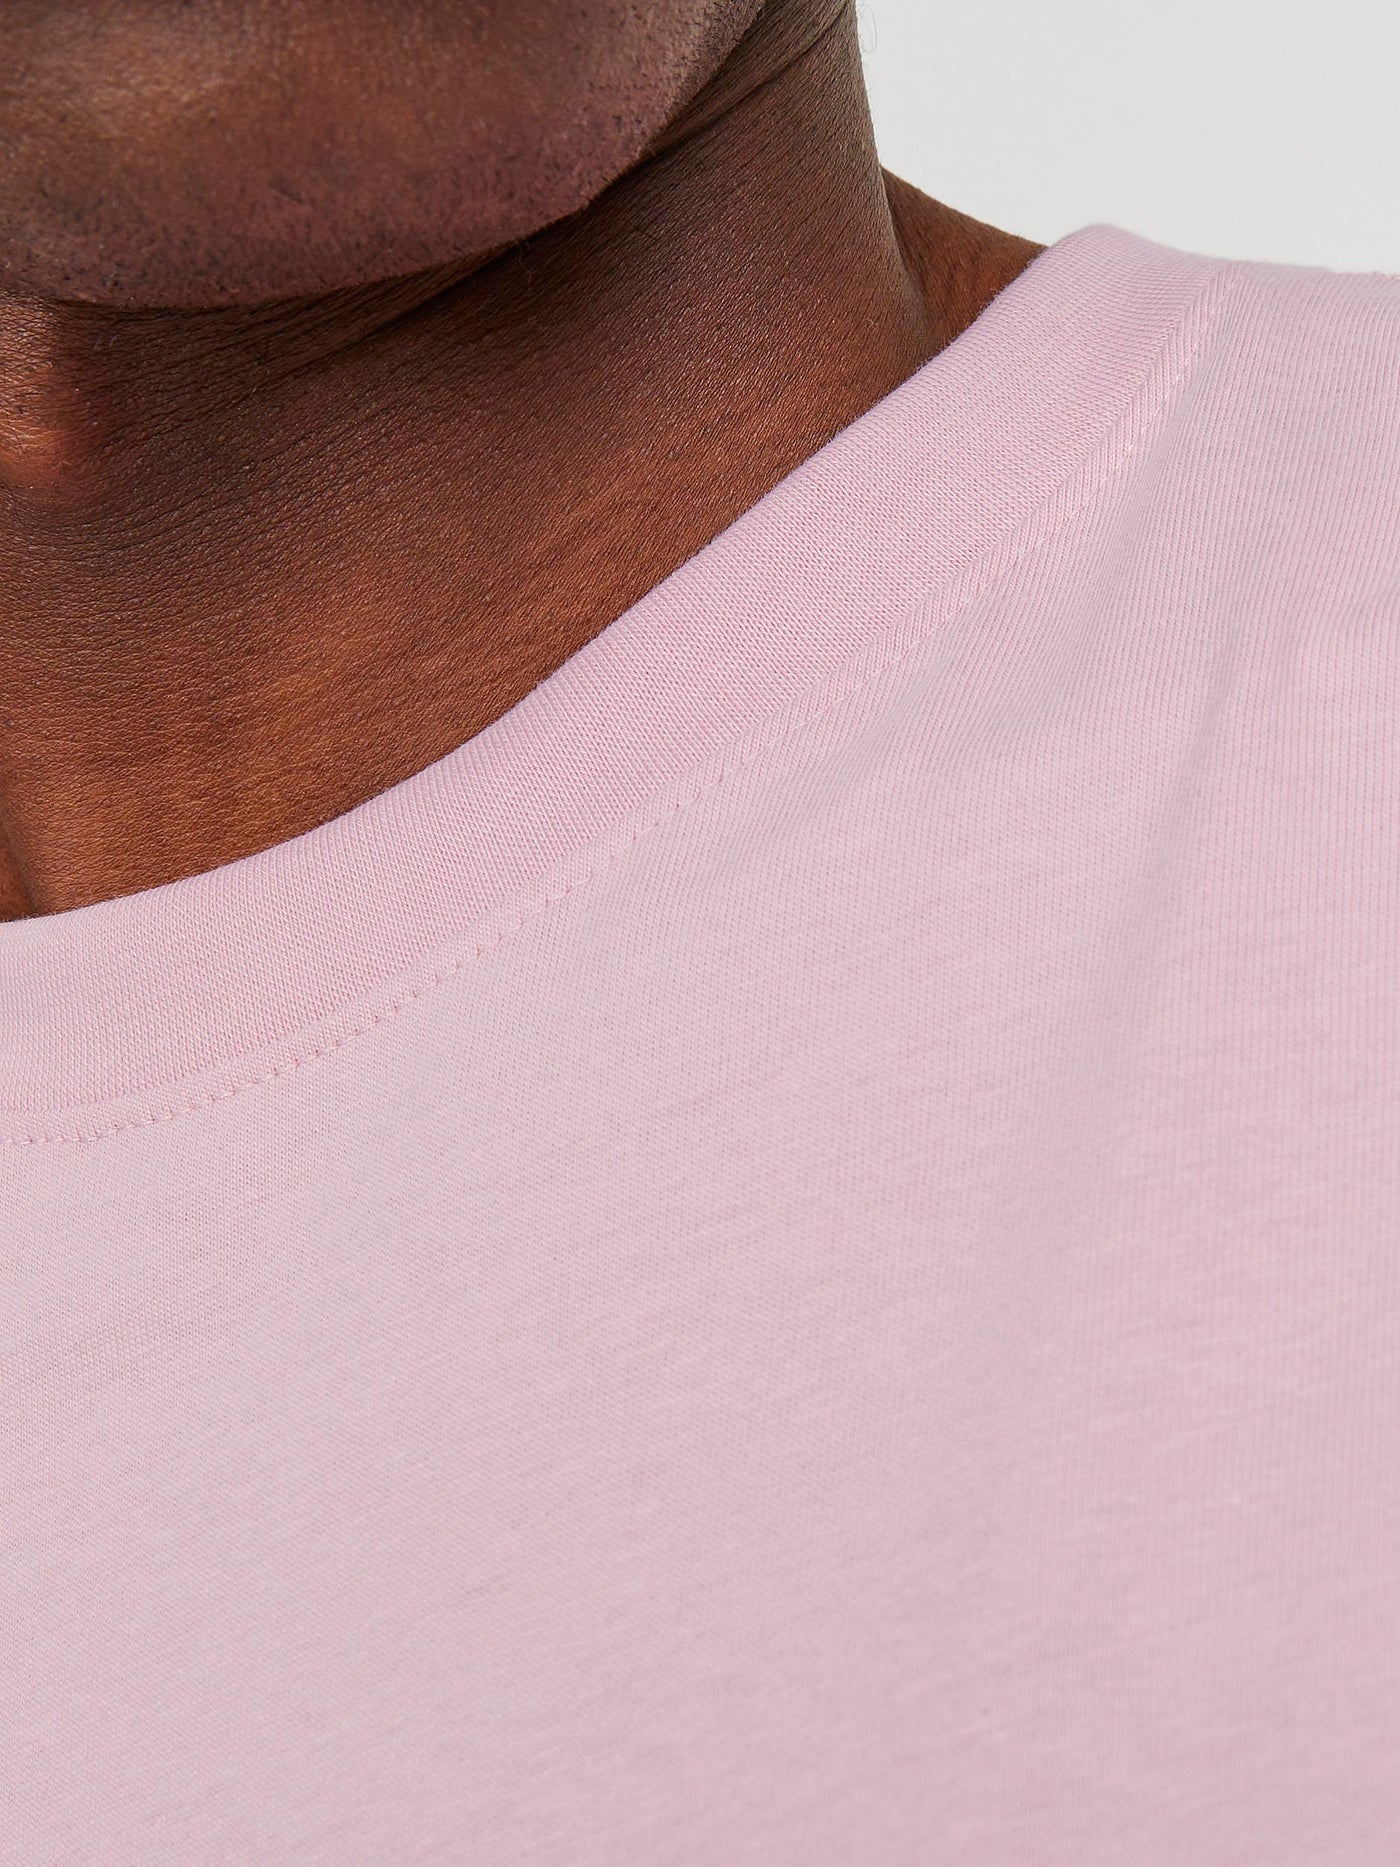 T-shirt rose imprimé relief Vesterbro